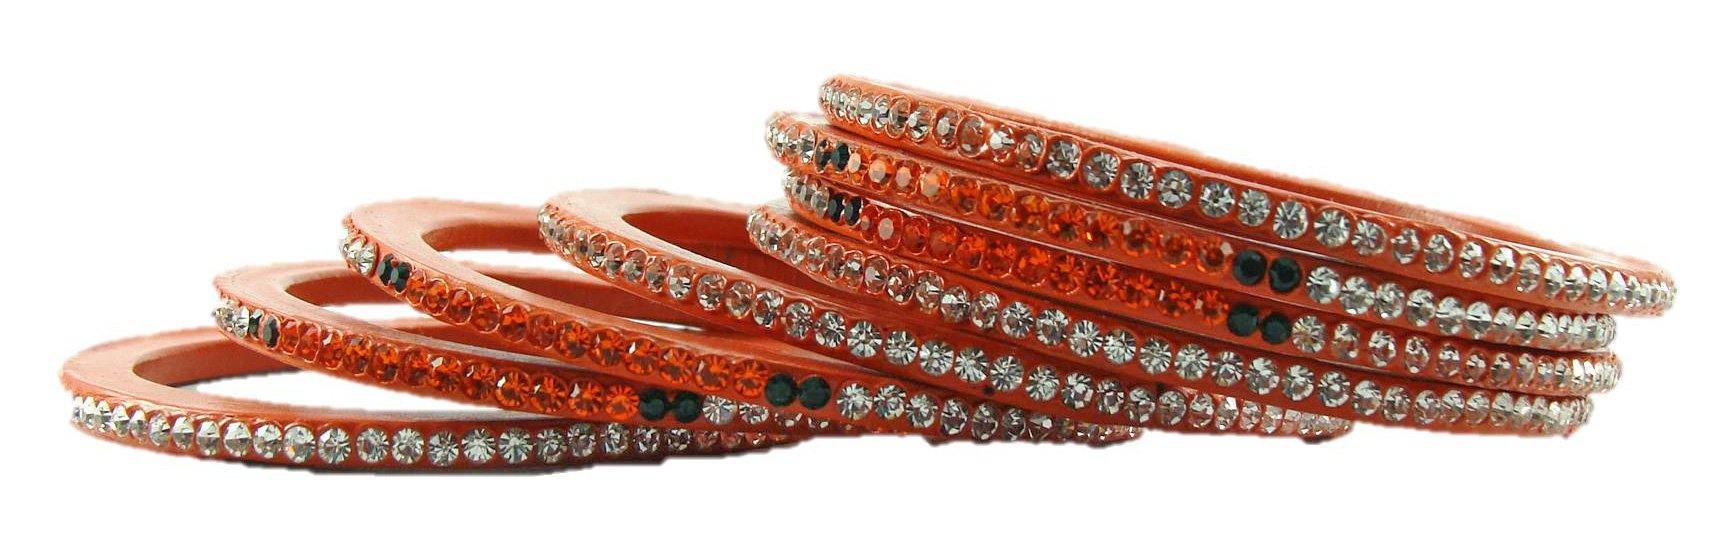 sukriti rajasthani festive orange lac bangles for women - set of 8